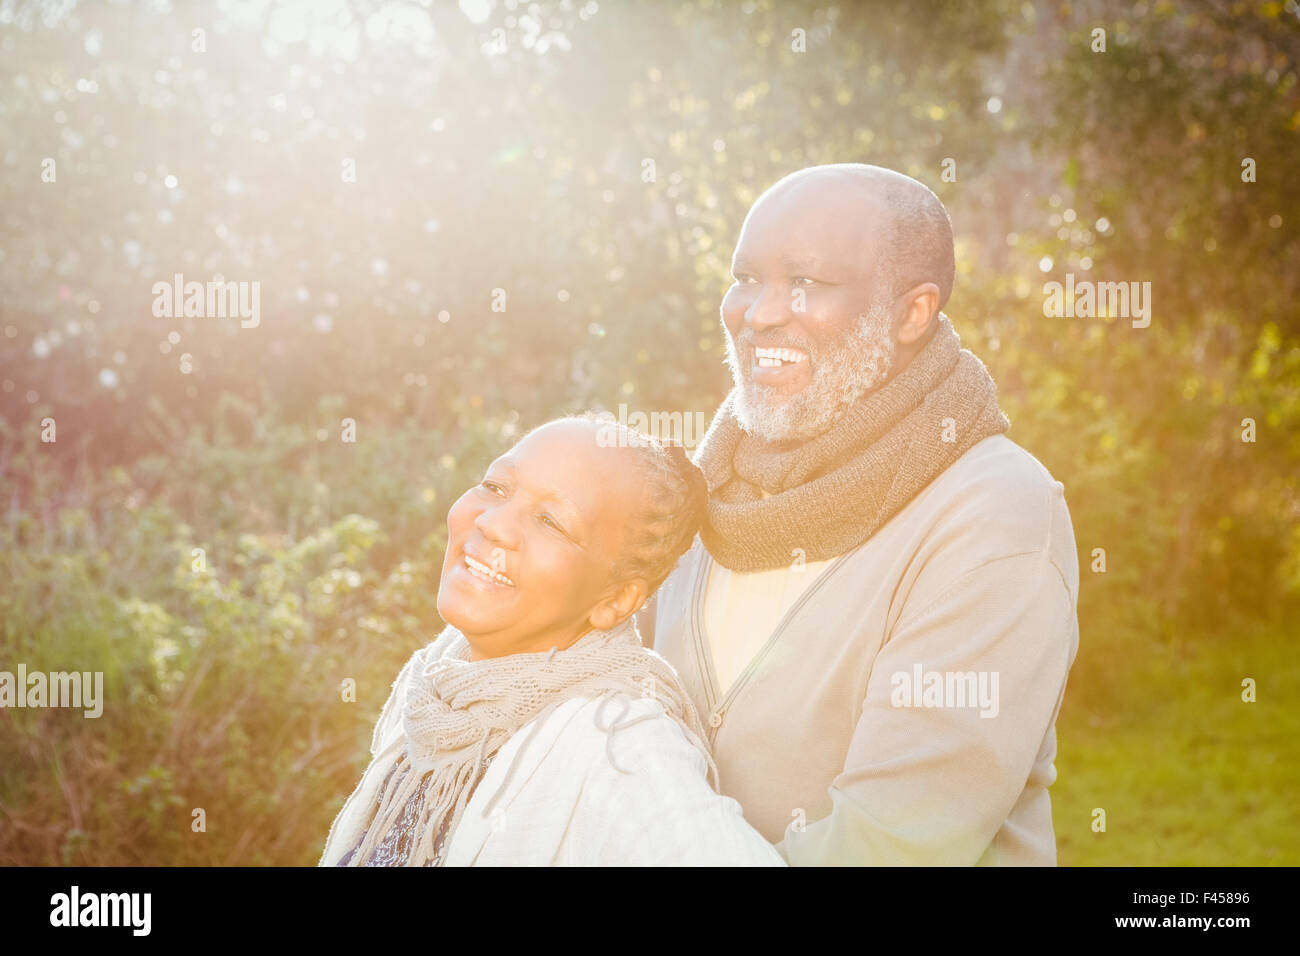 Happy peaceful senior couple embracing Stock Photo